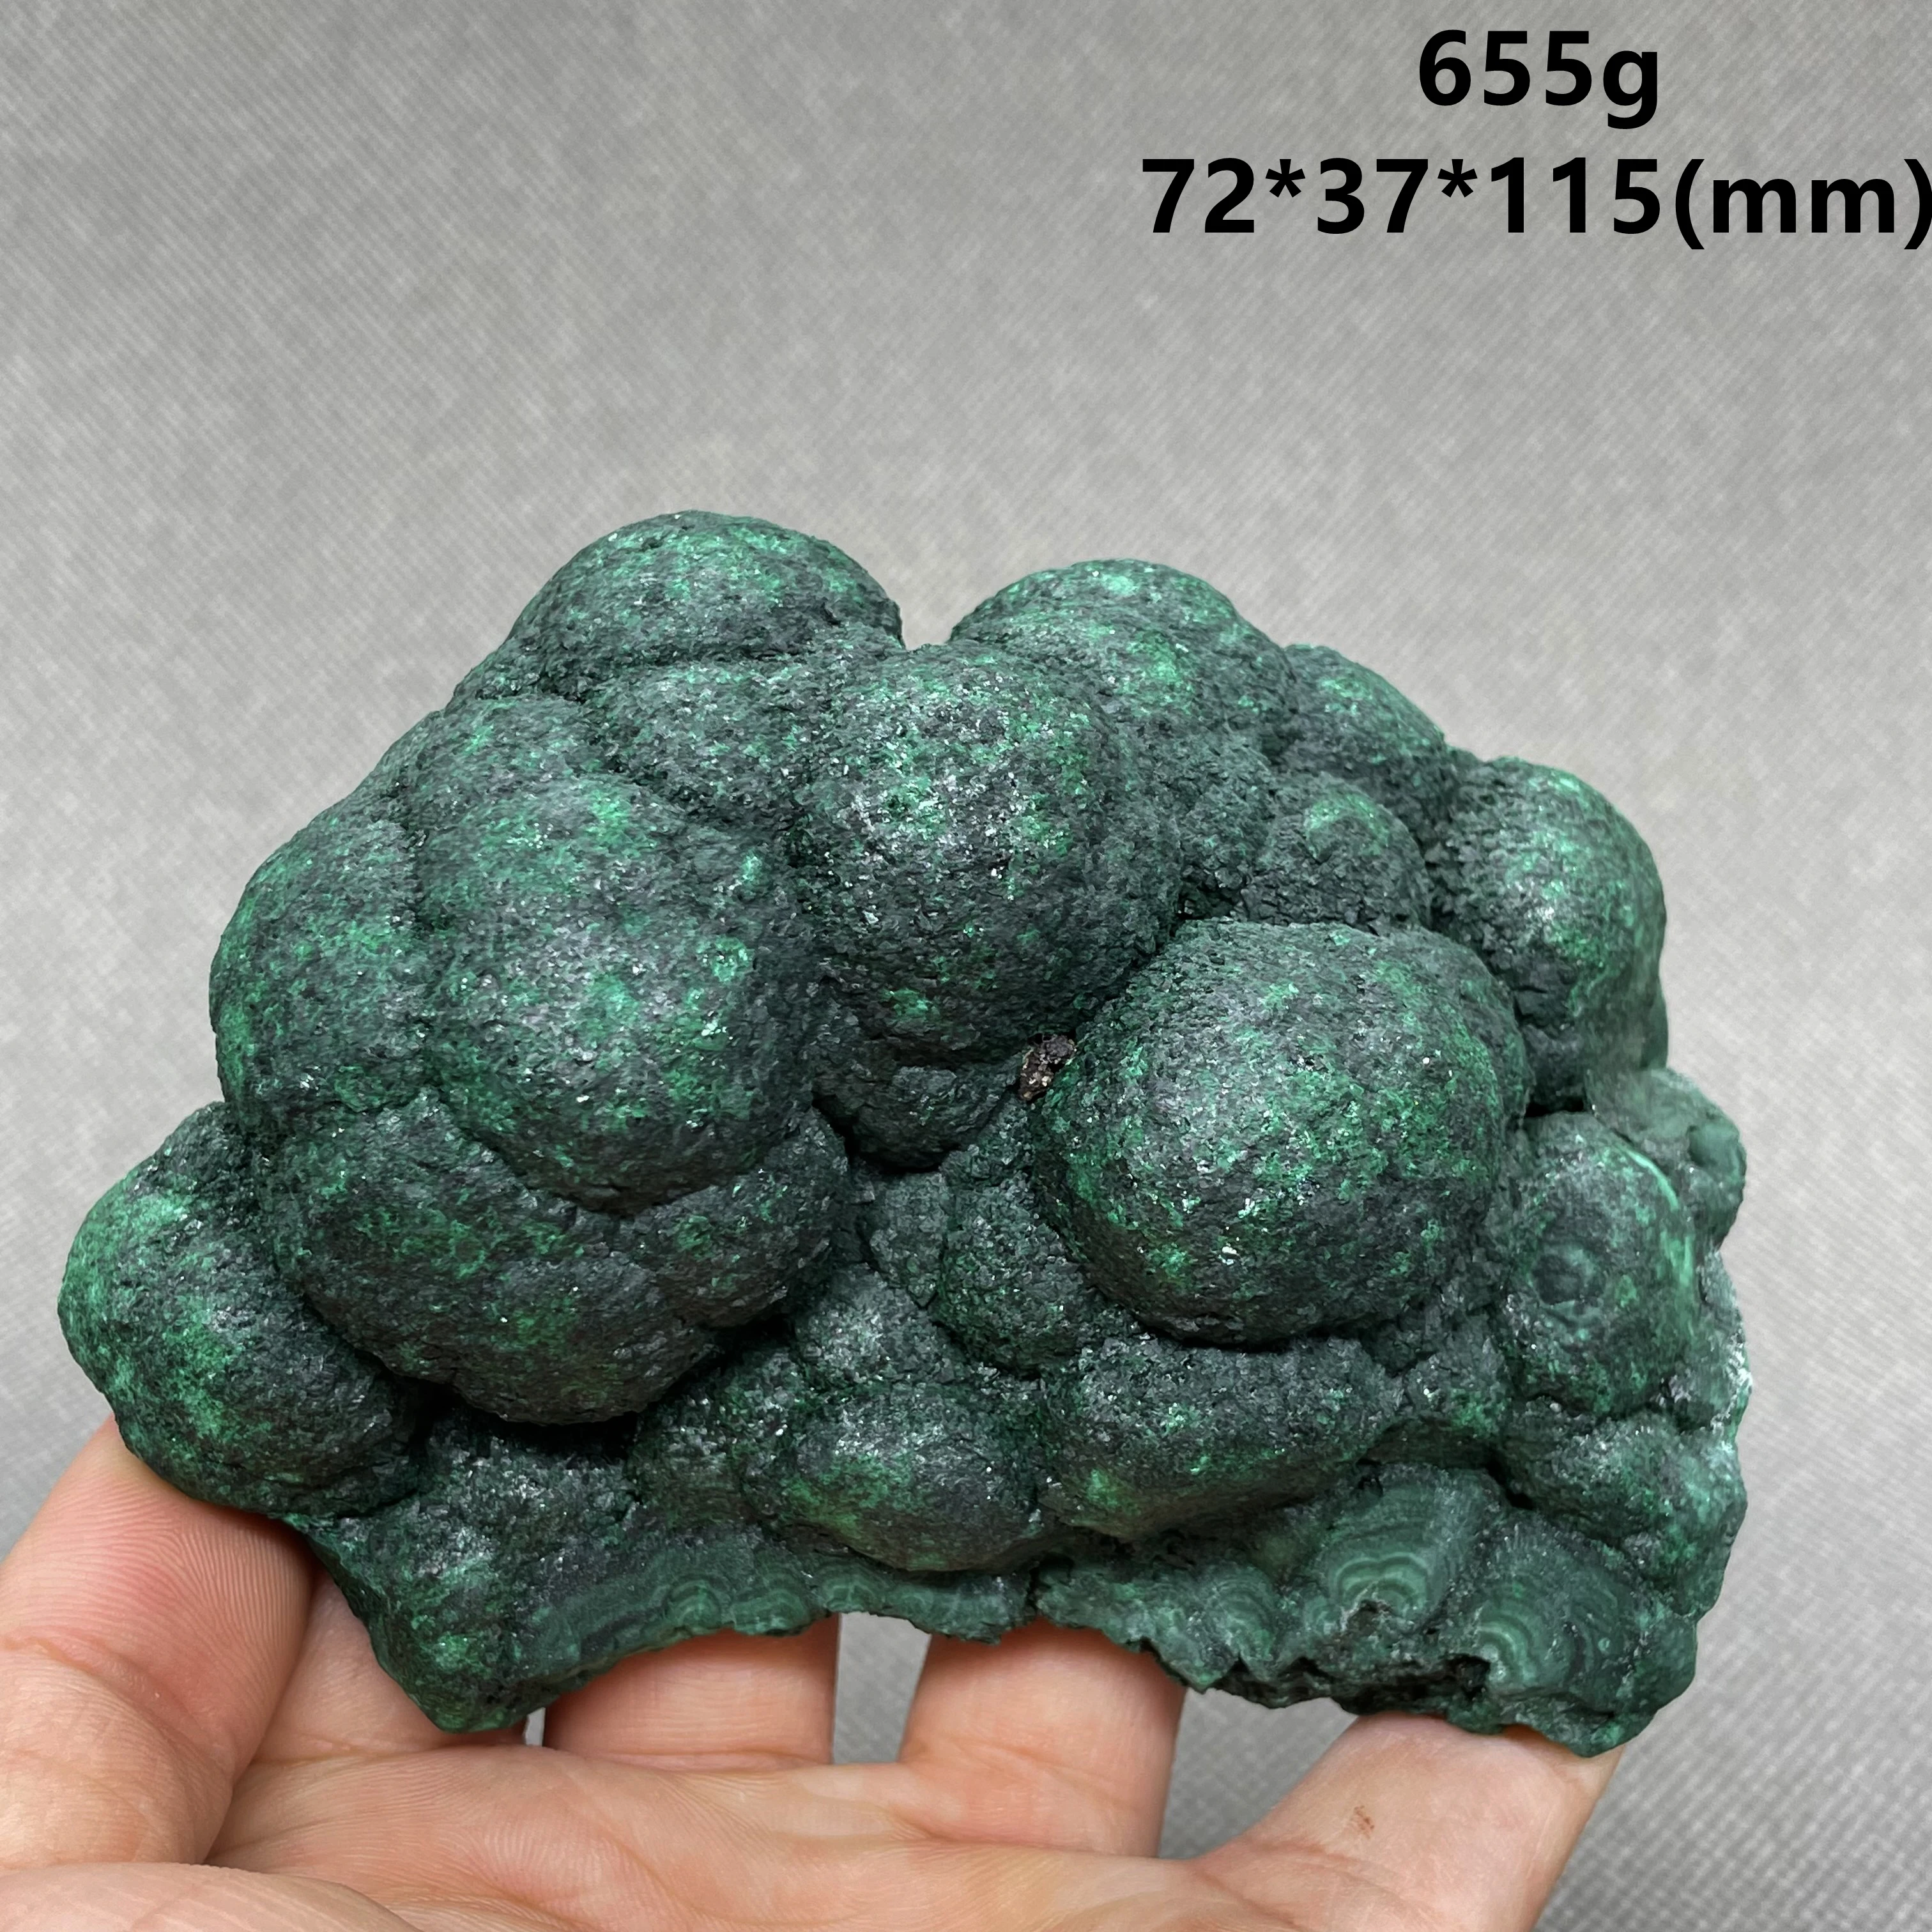 

NEW! BIG! 100% Natural Congo green malachite mineral specimen rough stone quartz Stones and crystals Healing crystal